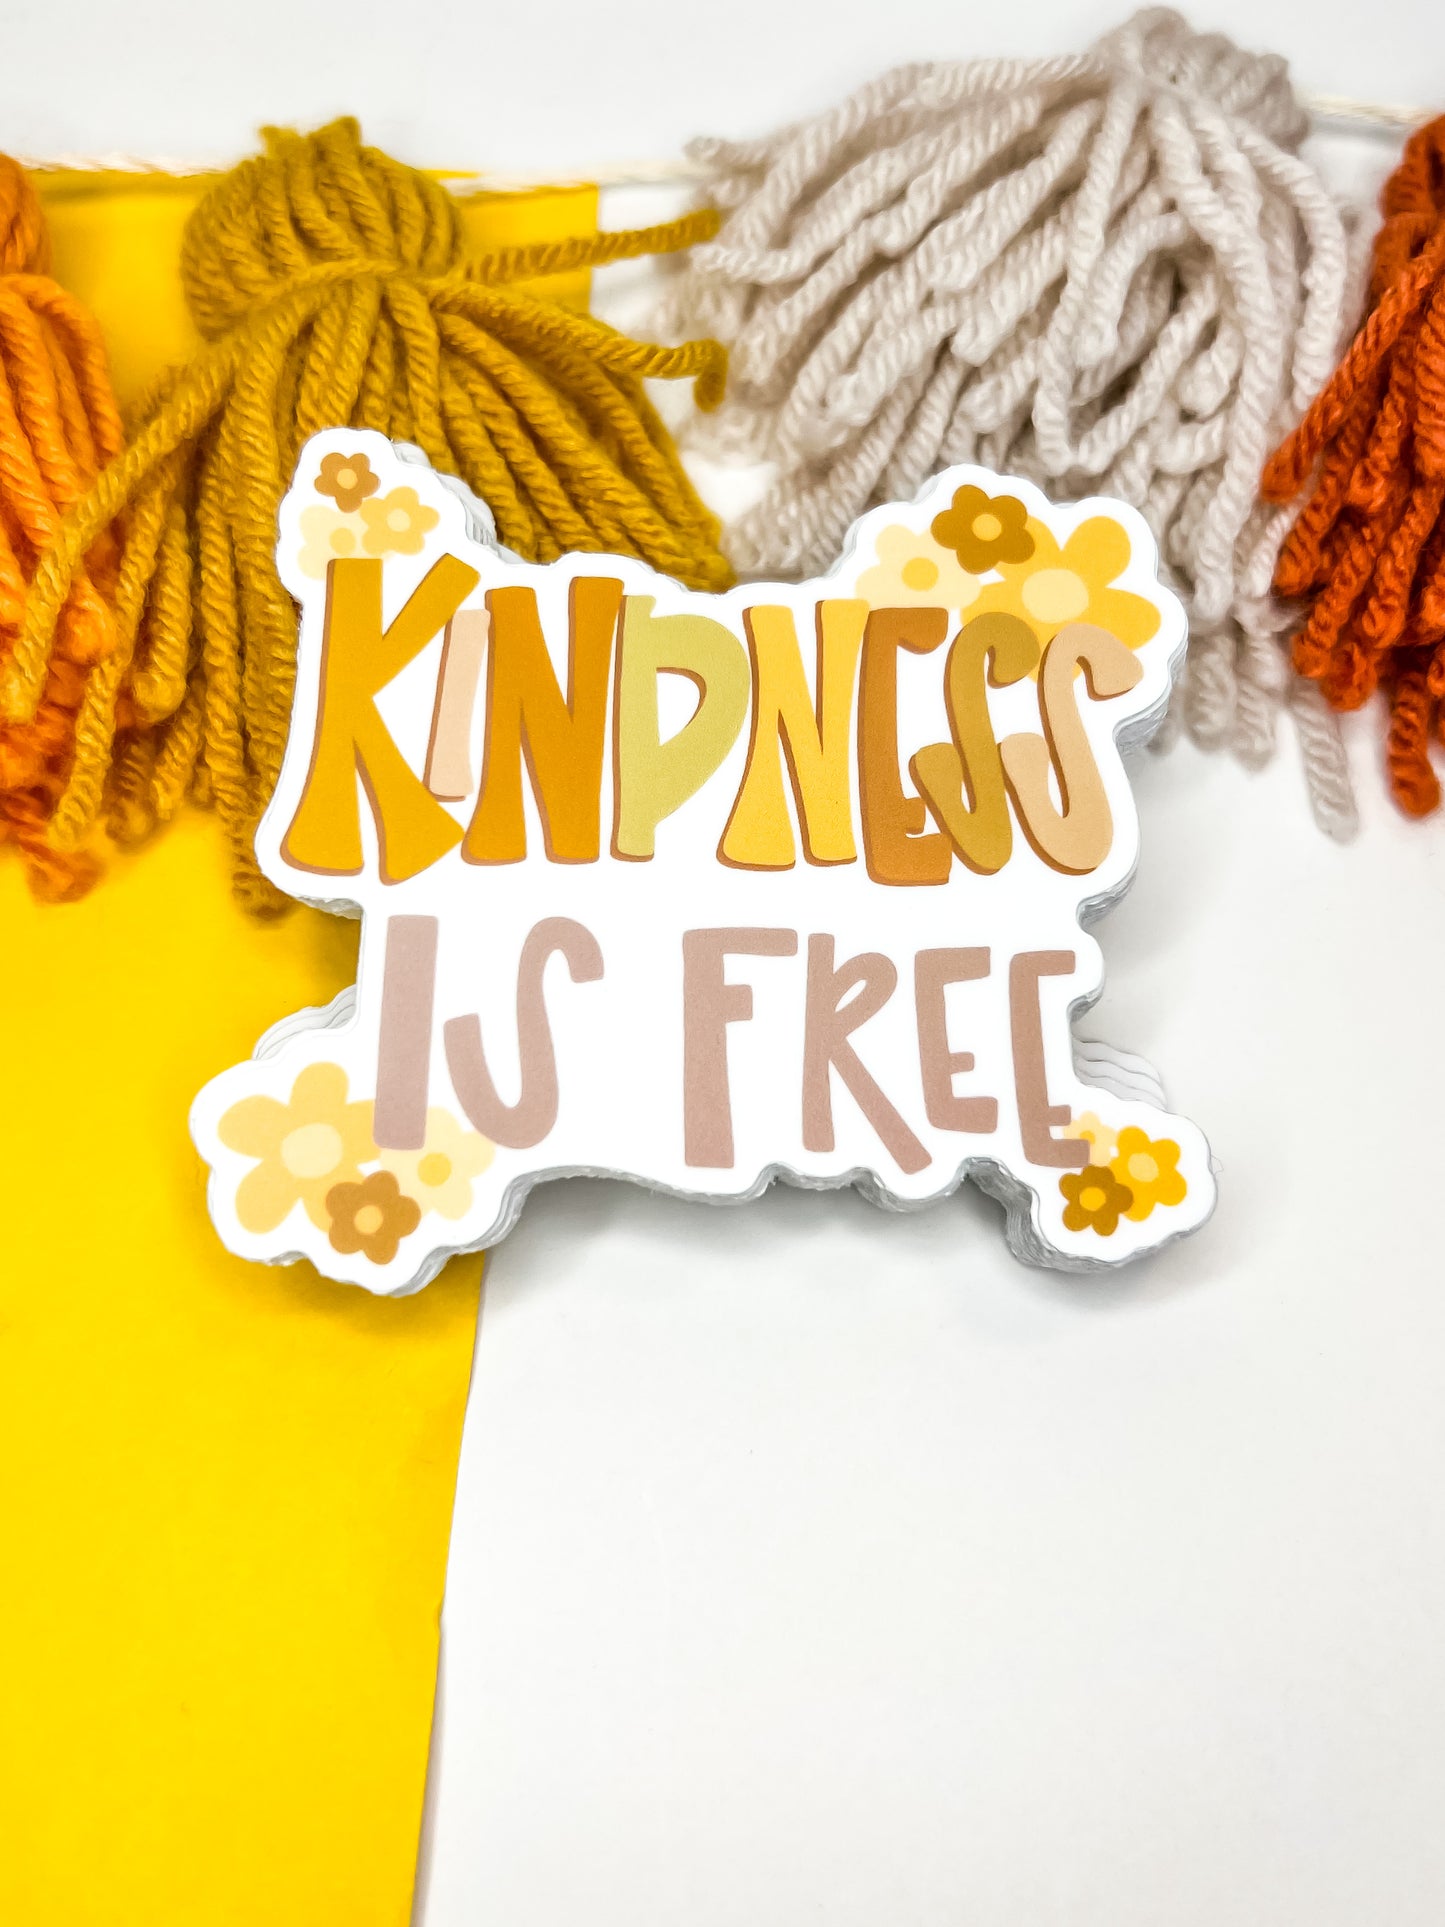 Kindness is free sticker.